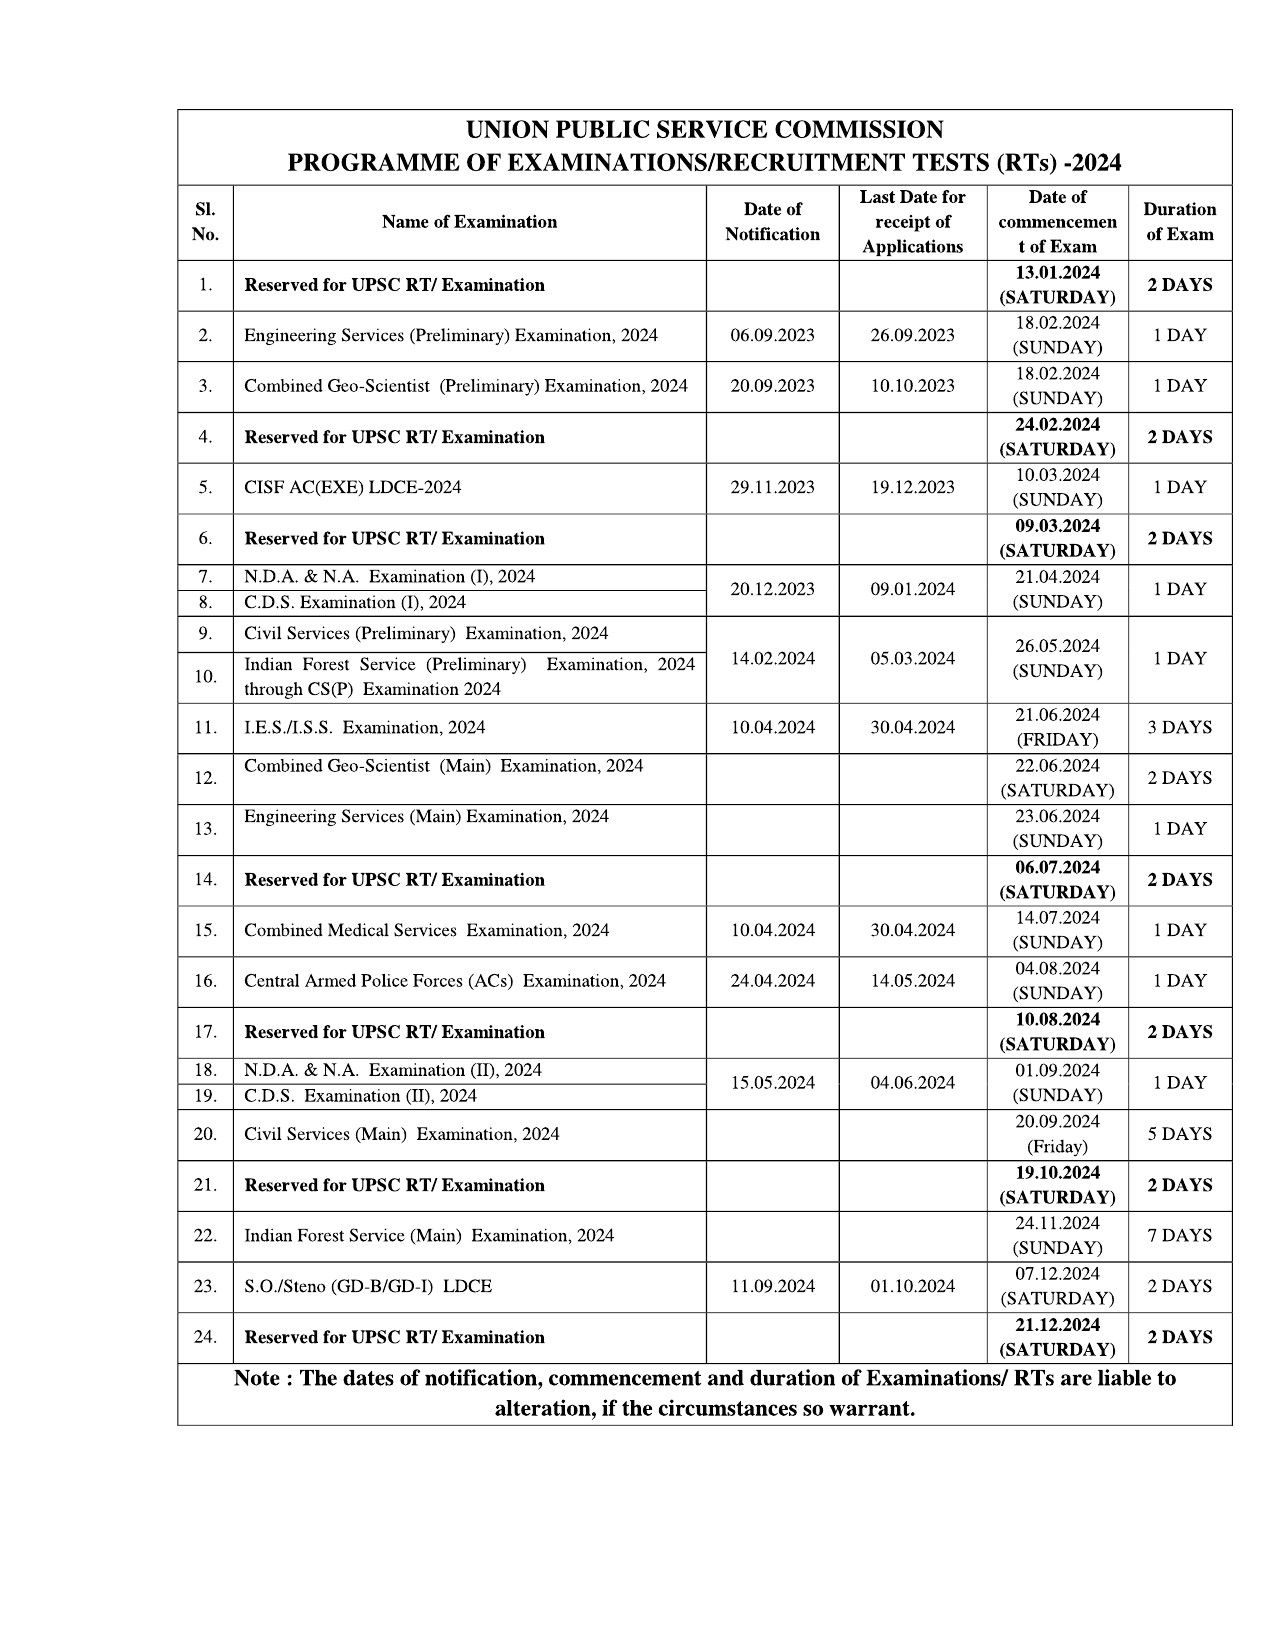 UPSC Examinations 2024 Annual Calendar - Notification Image 1